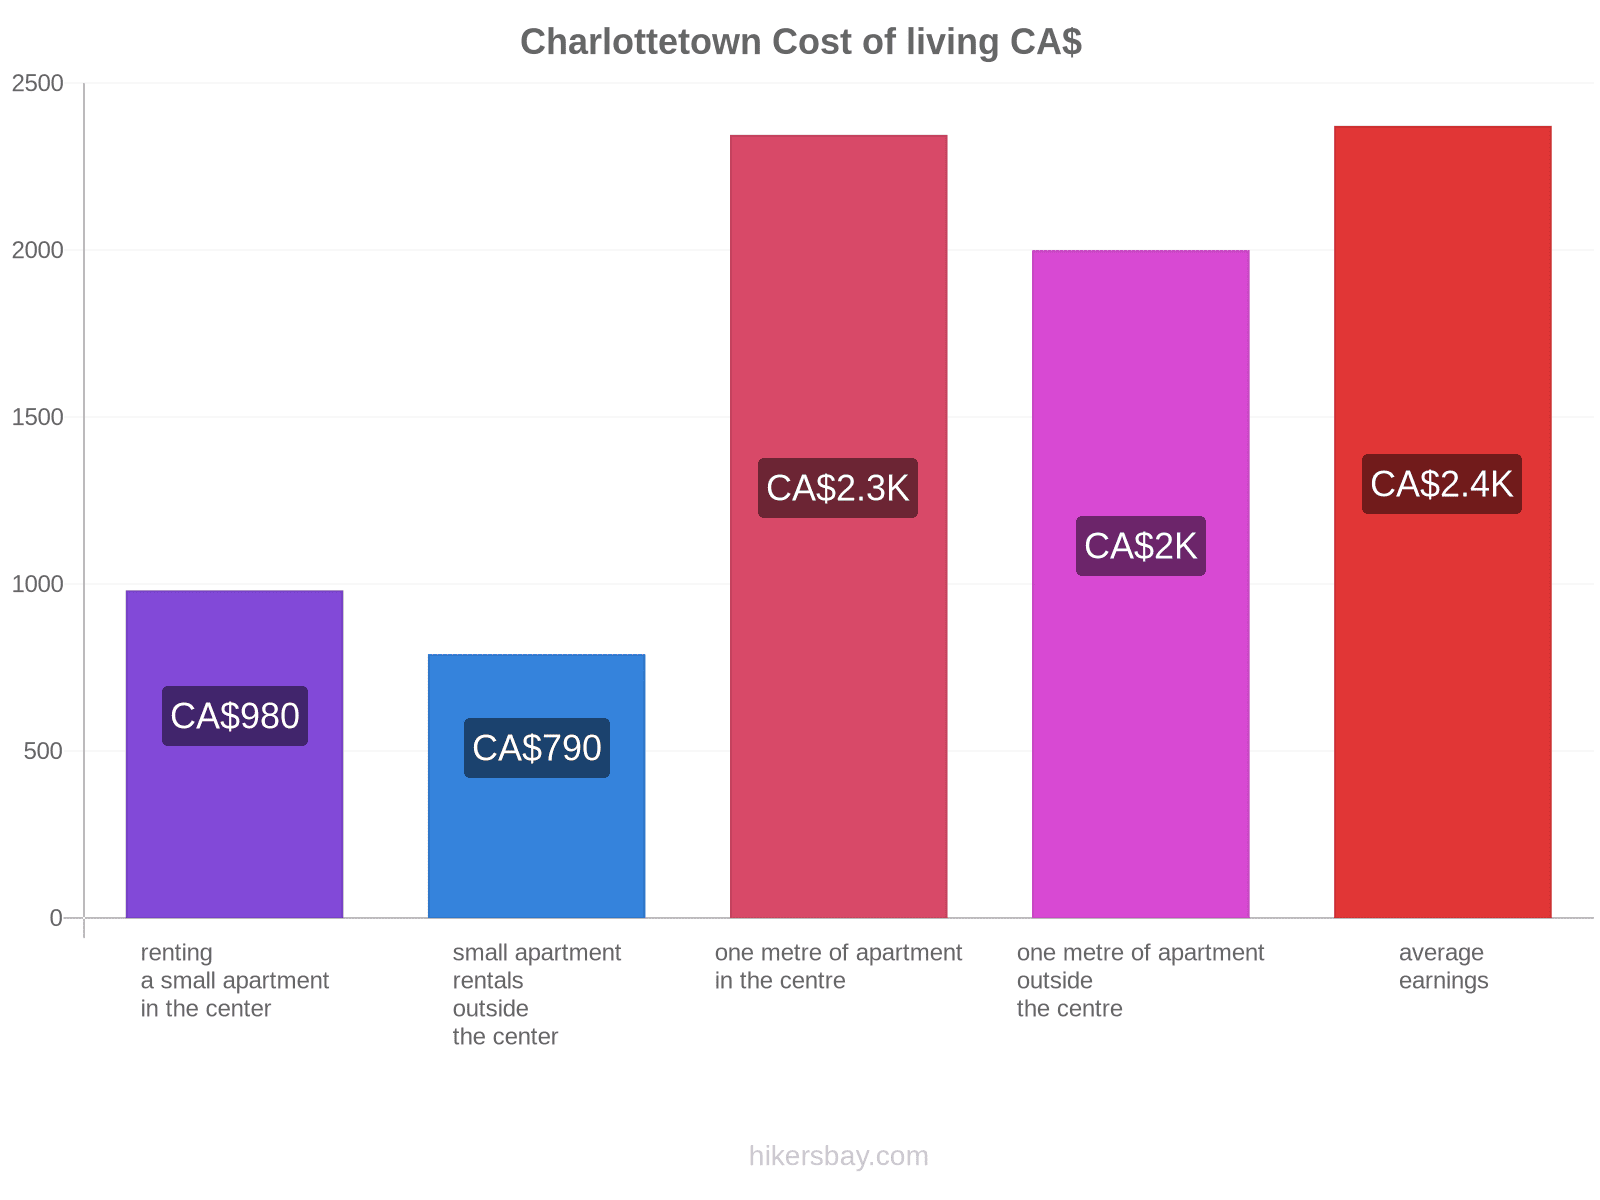 Charlottetown cost of living hikersbay.com